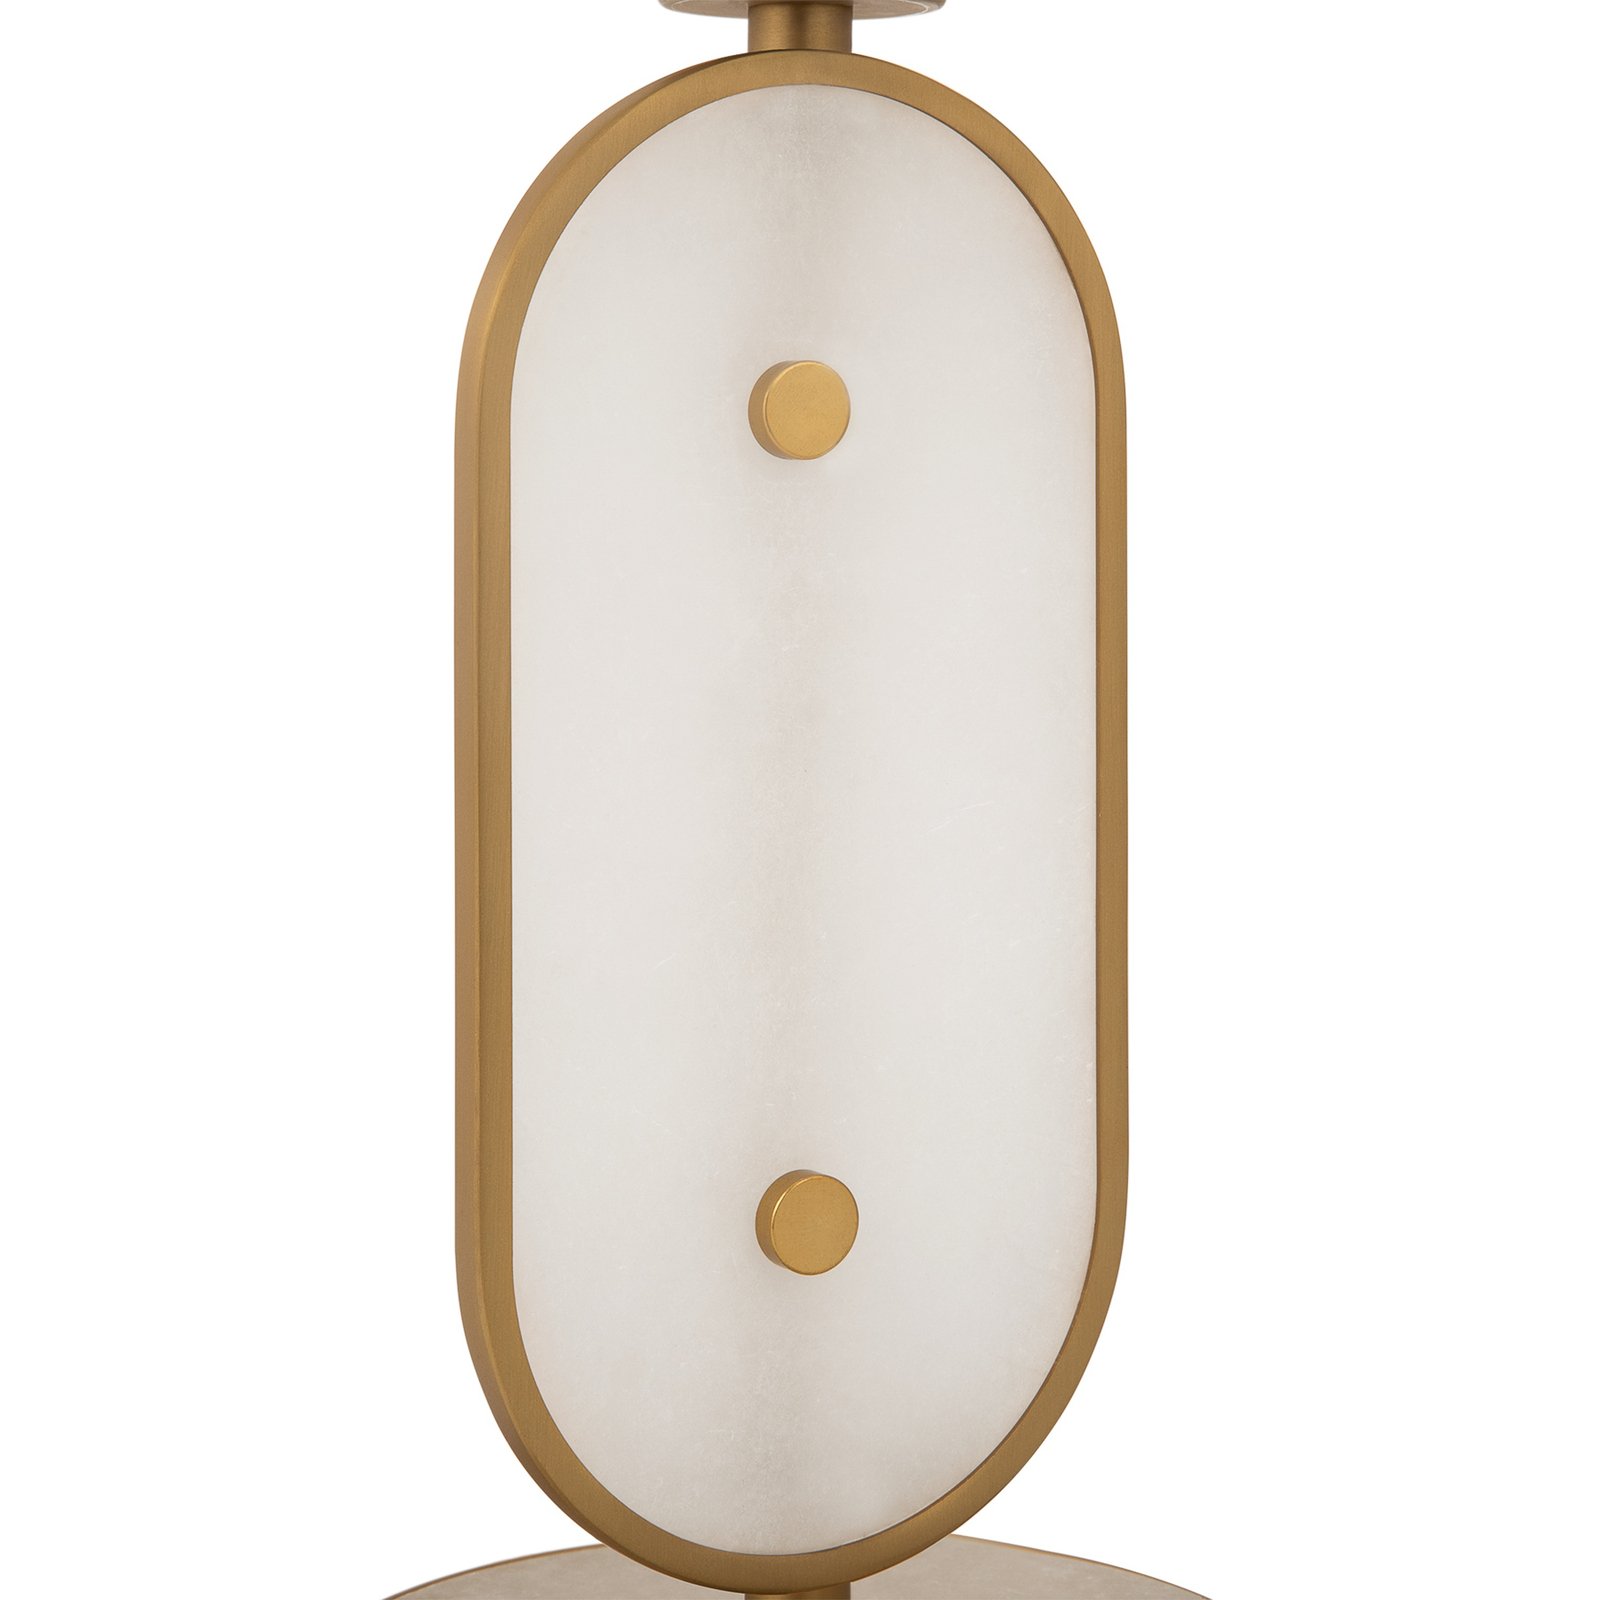 Maytoni tafellamp Marmo, goudkleur/natuursteen